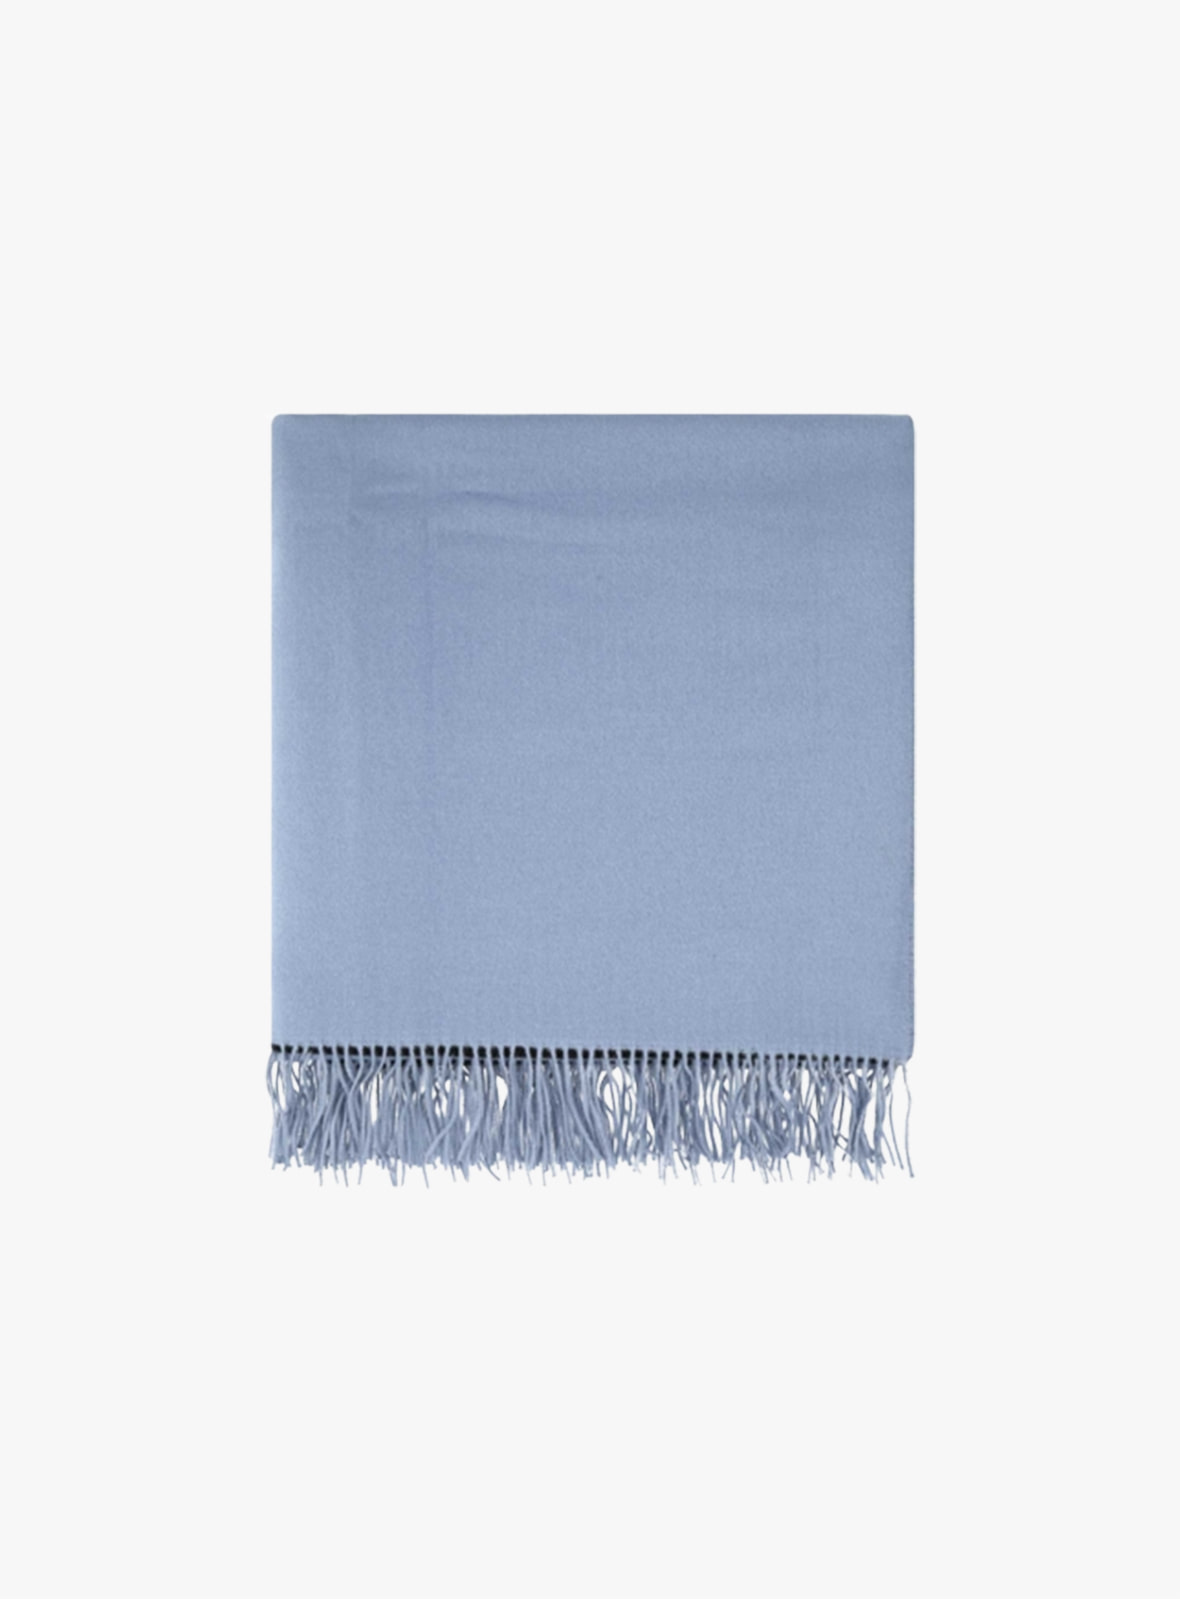 PRADA - COPERTA Powder blue cashmere blanket 2QA0112DZ7 F0M25